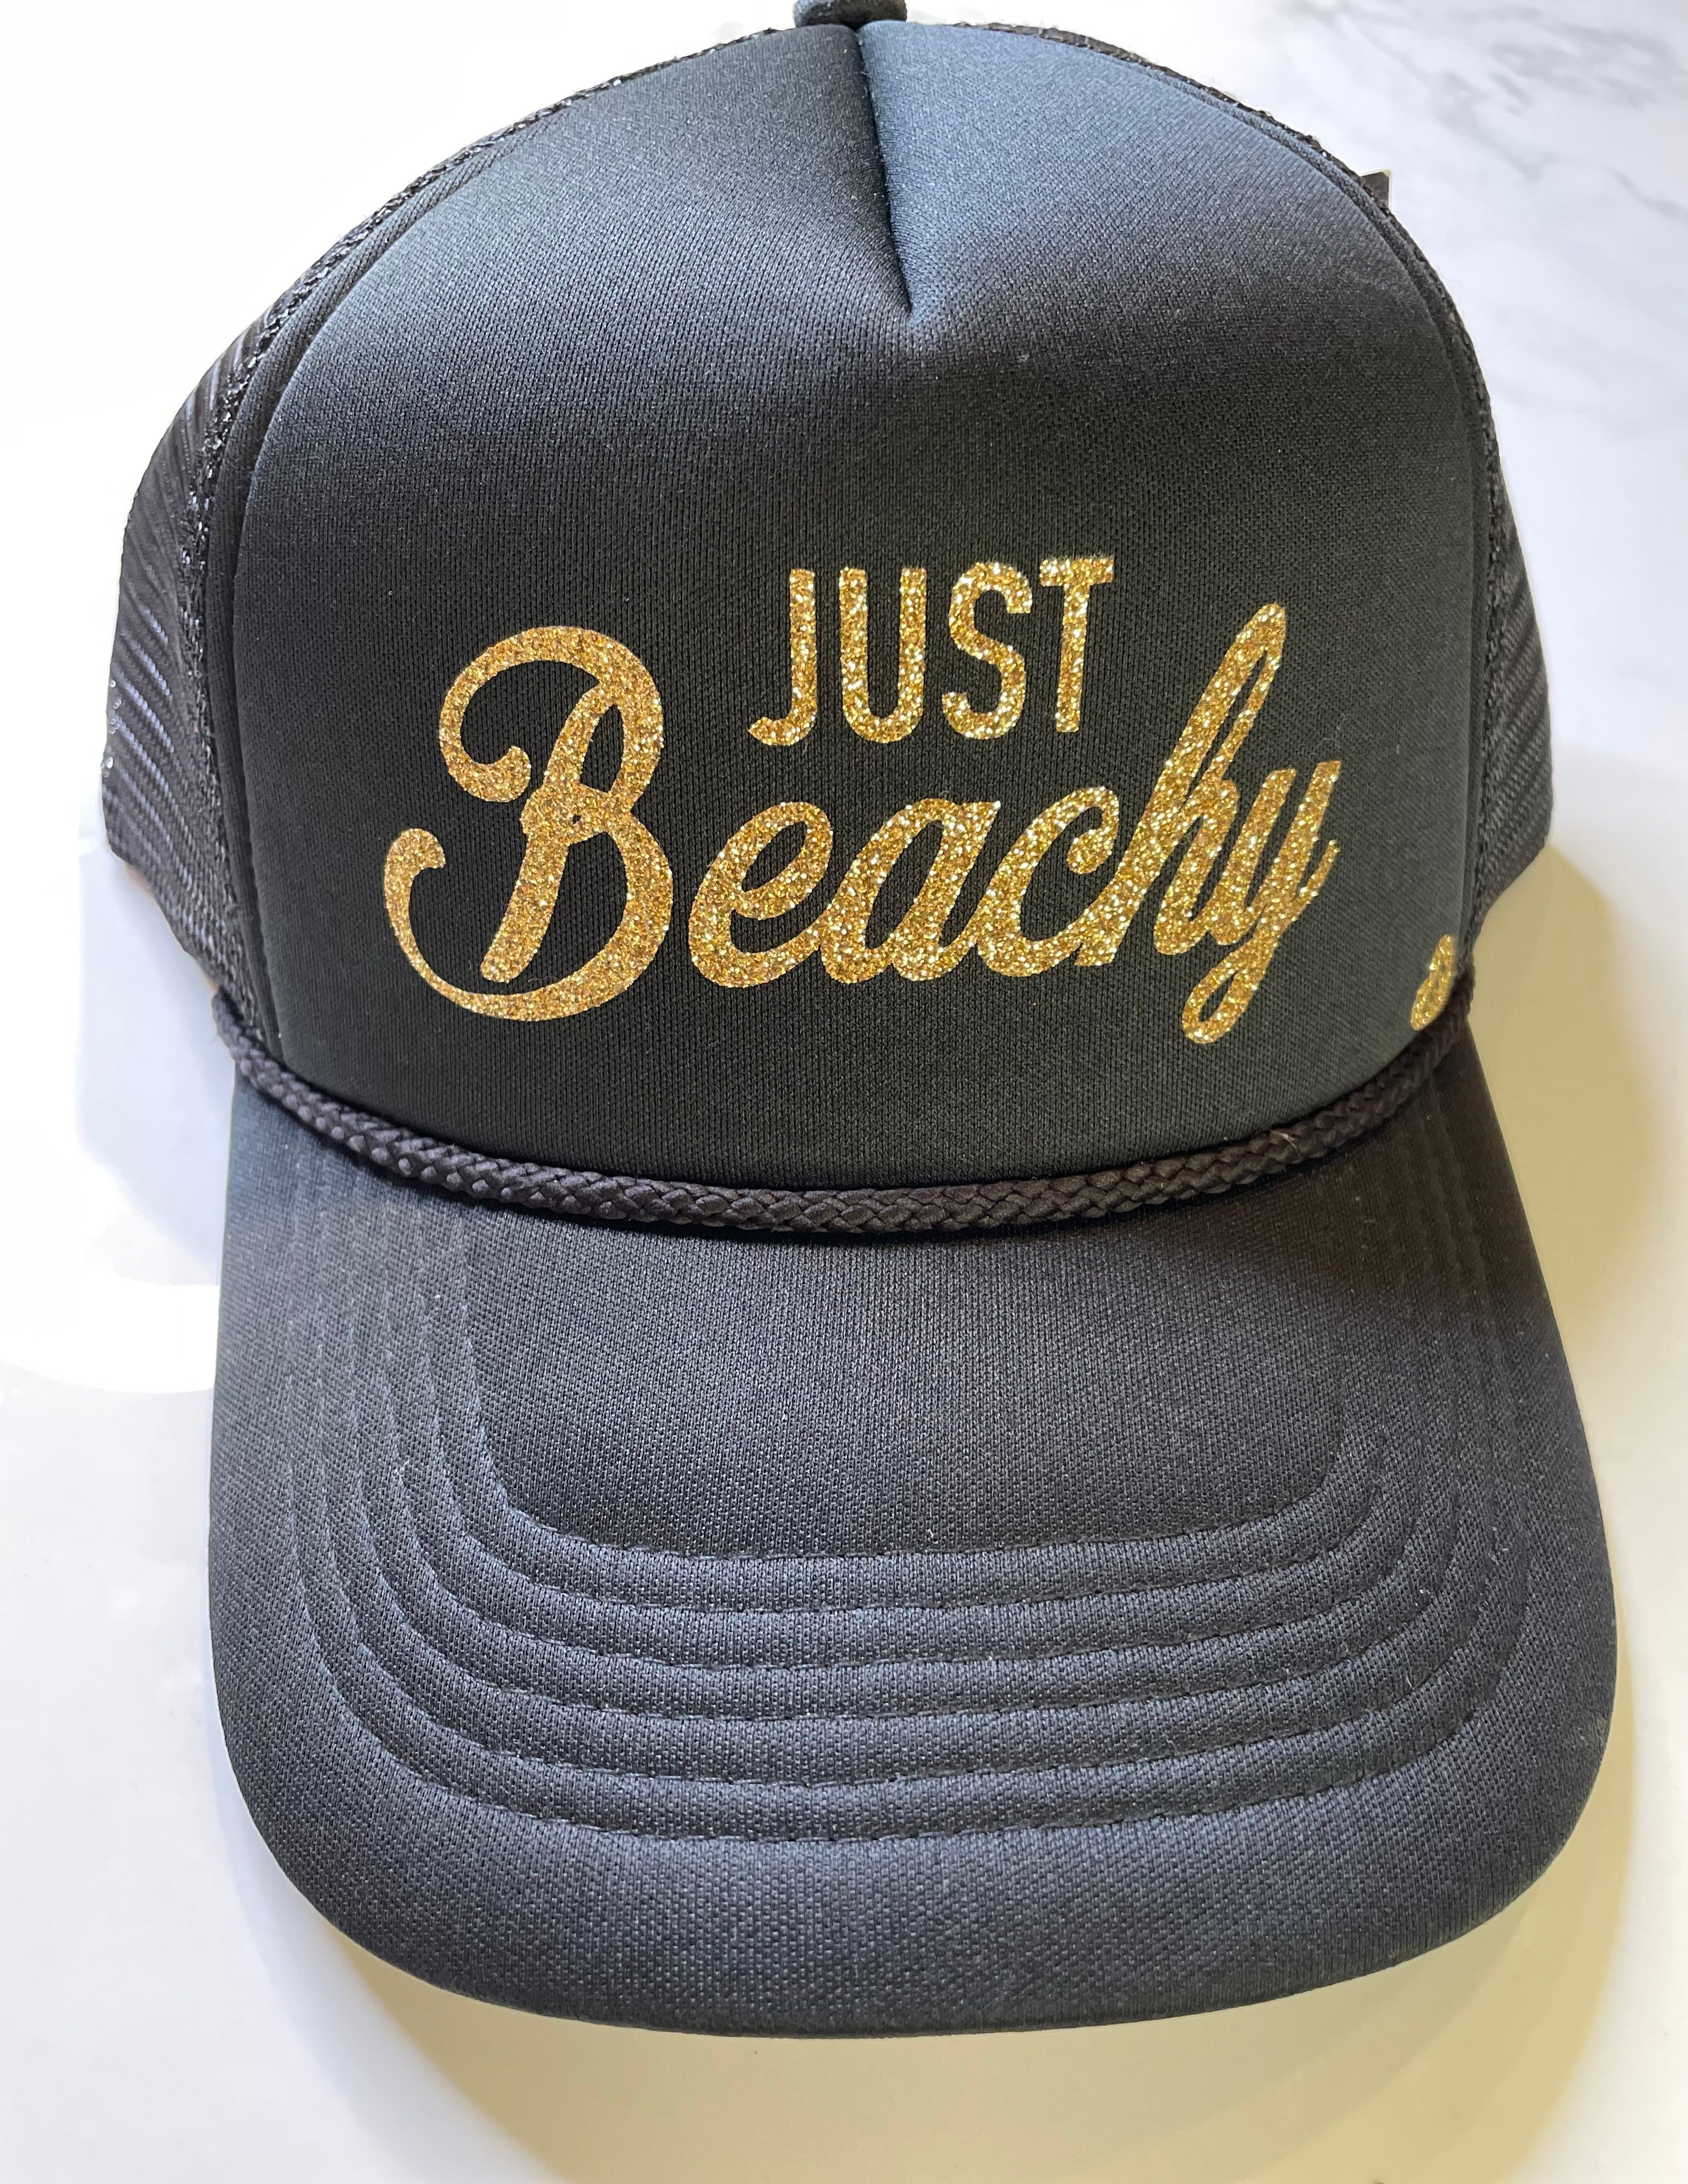 Just Beachy